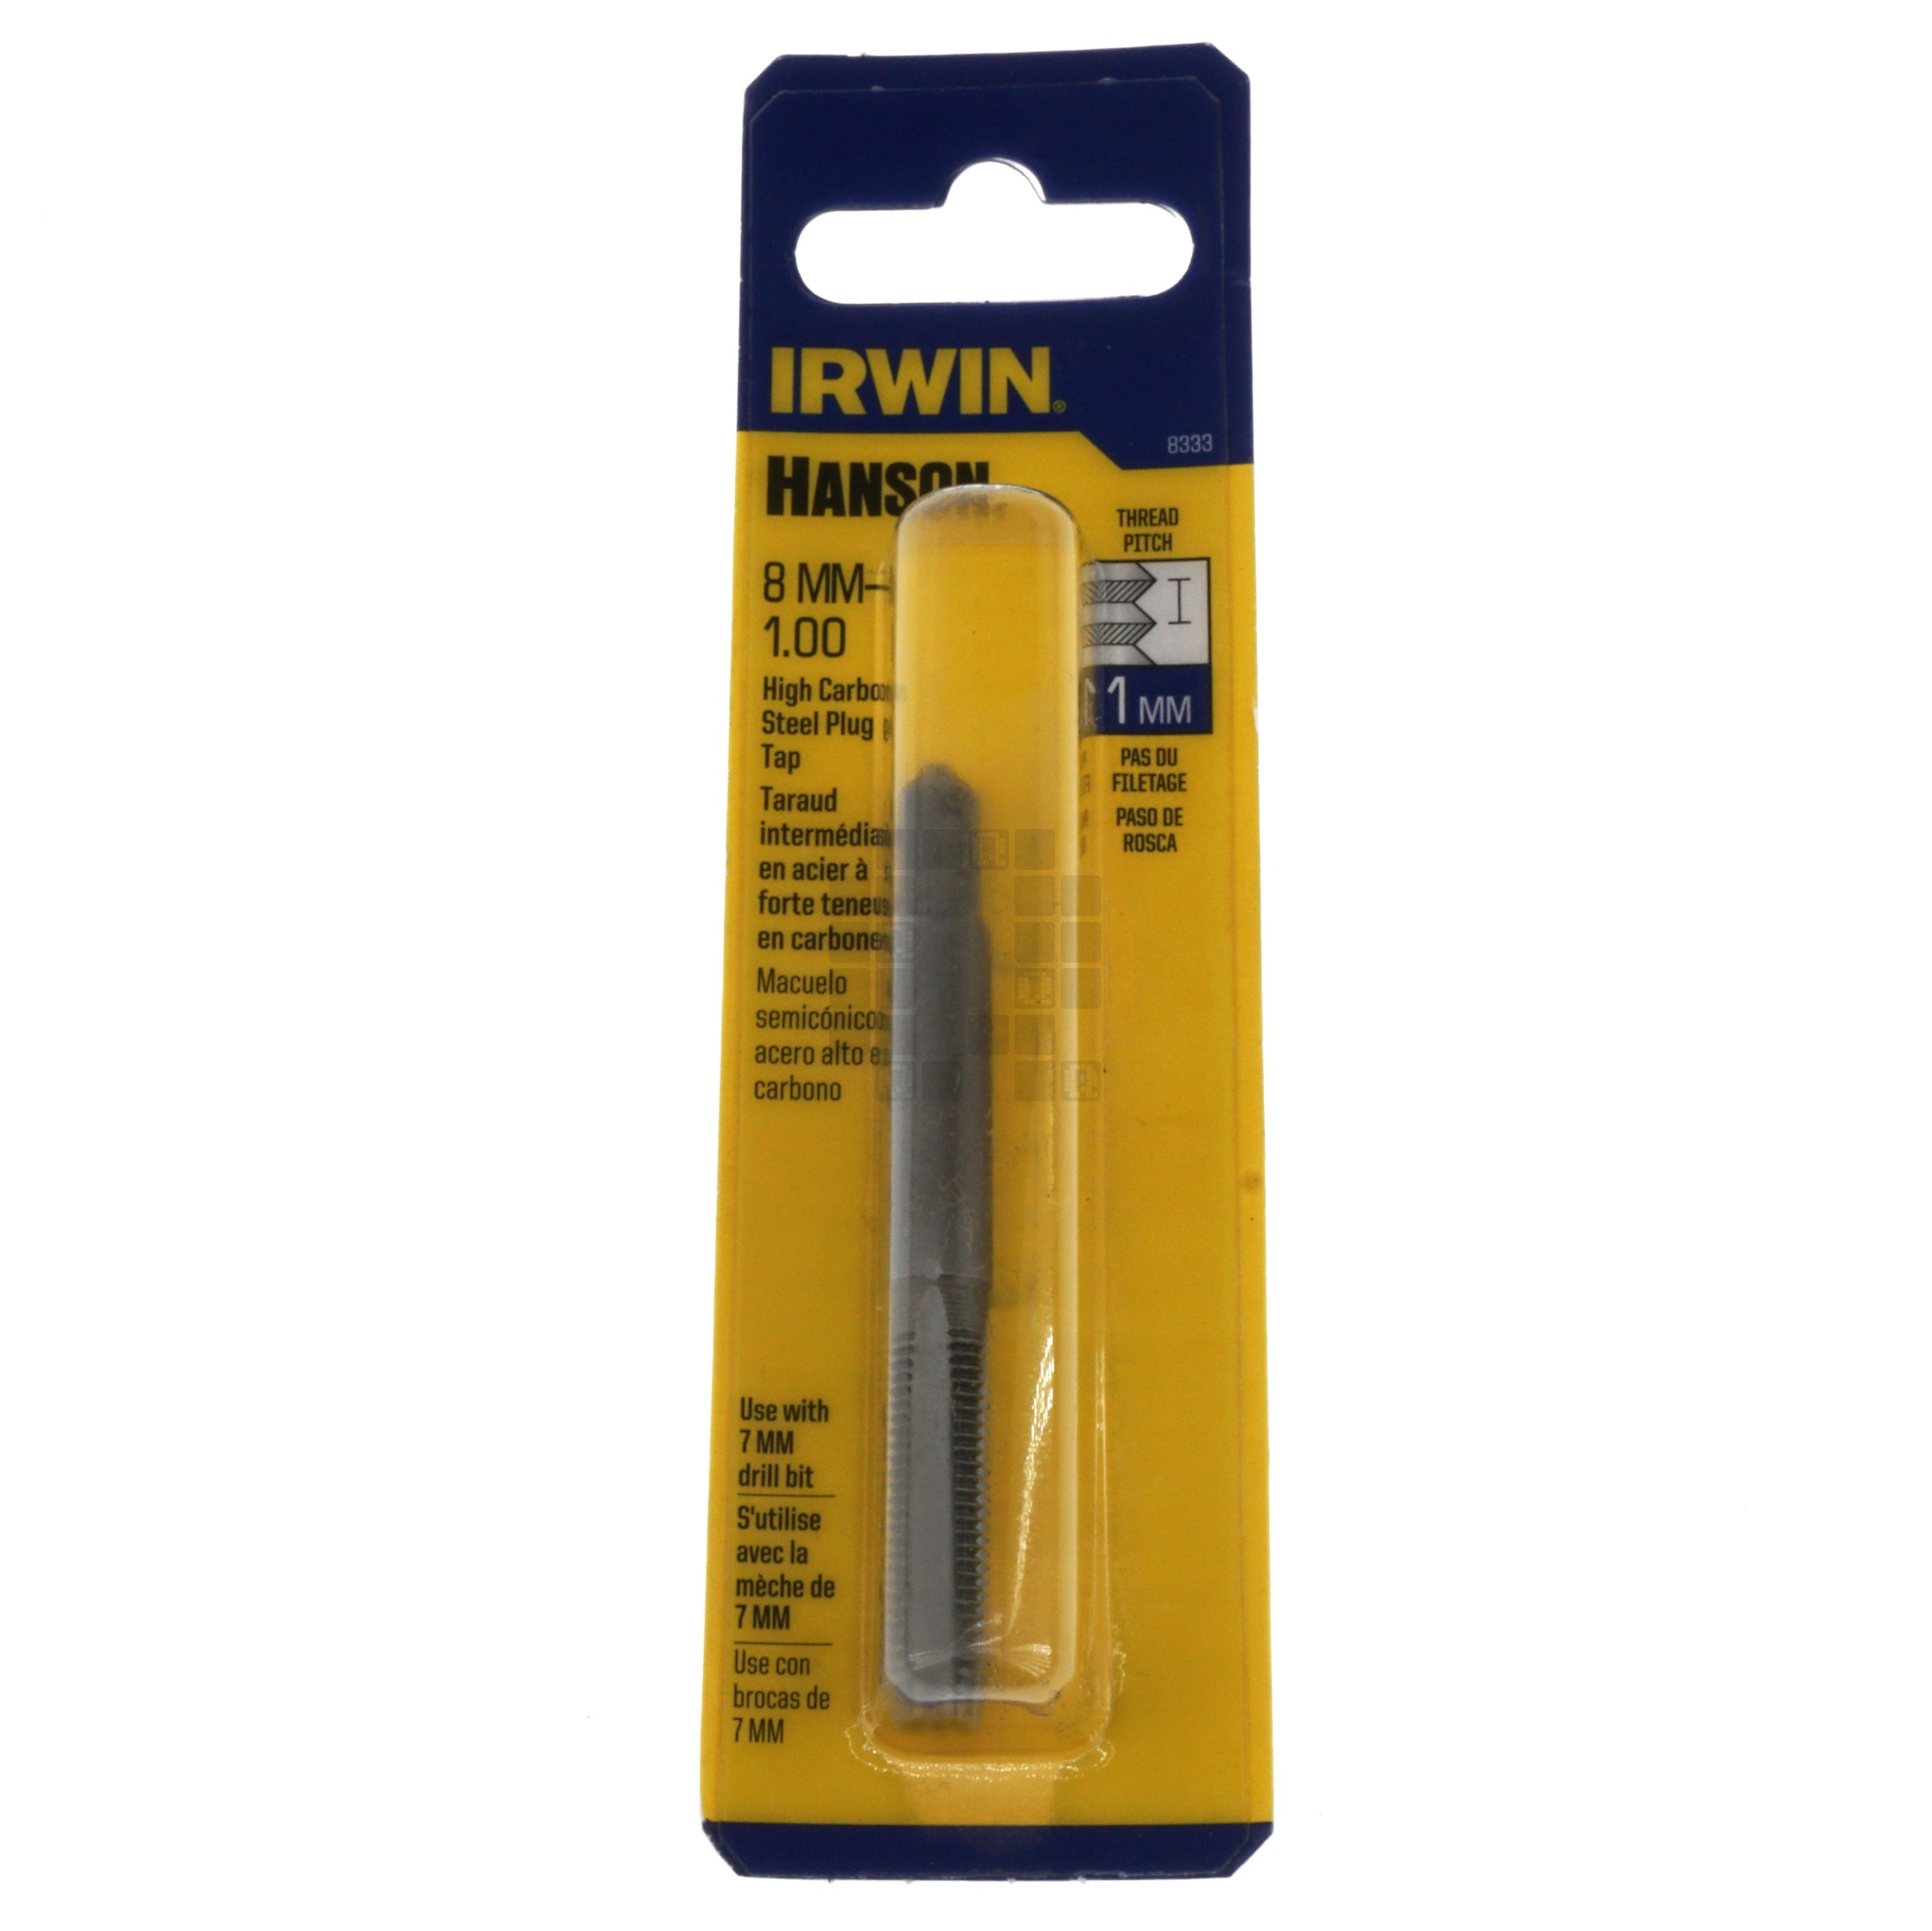 Irwin Hanson 8333 8mm-1.00 High Carbon Steel Plug Tap, M8-1.00